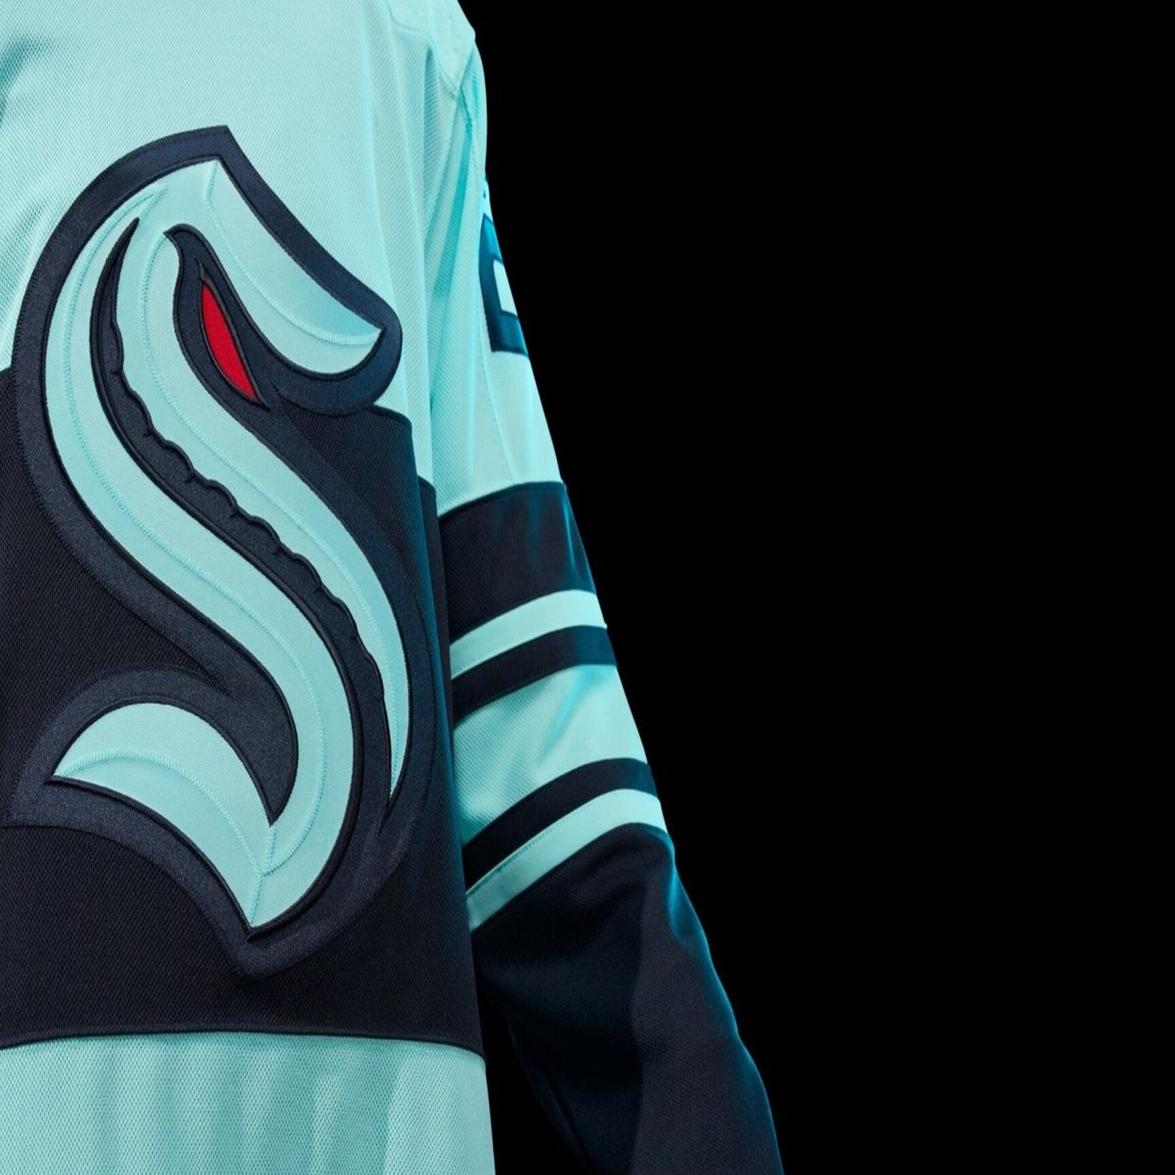 Flames unveil new reverse retro jersey they'll wear next season